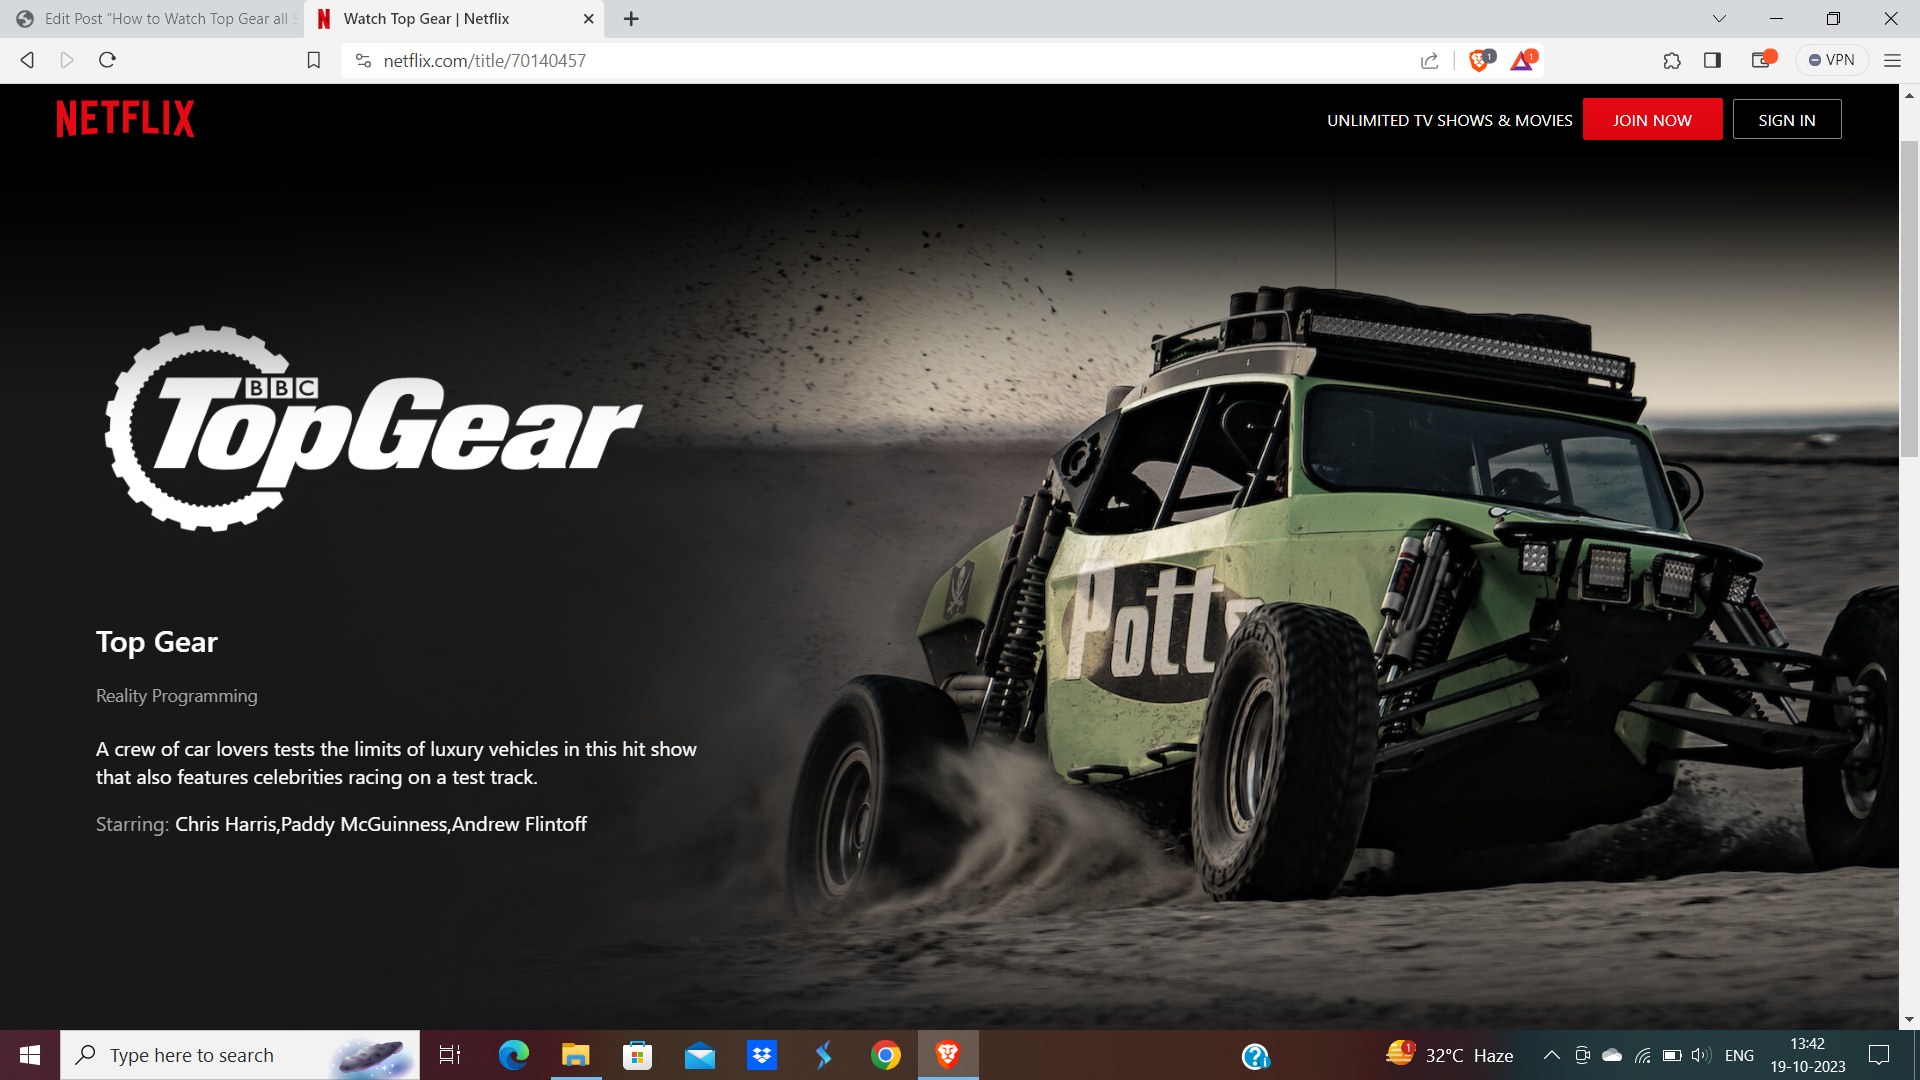 Watch Top Gear on Netflix